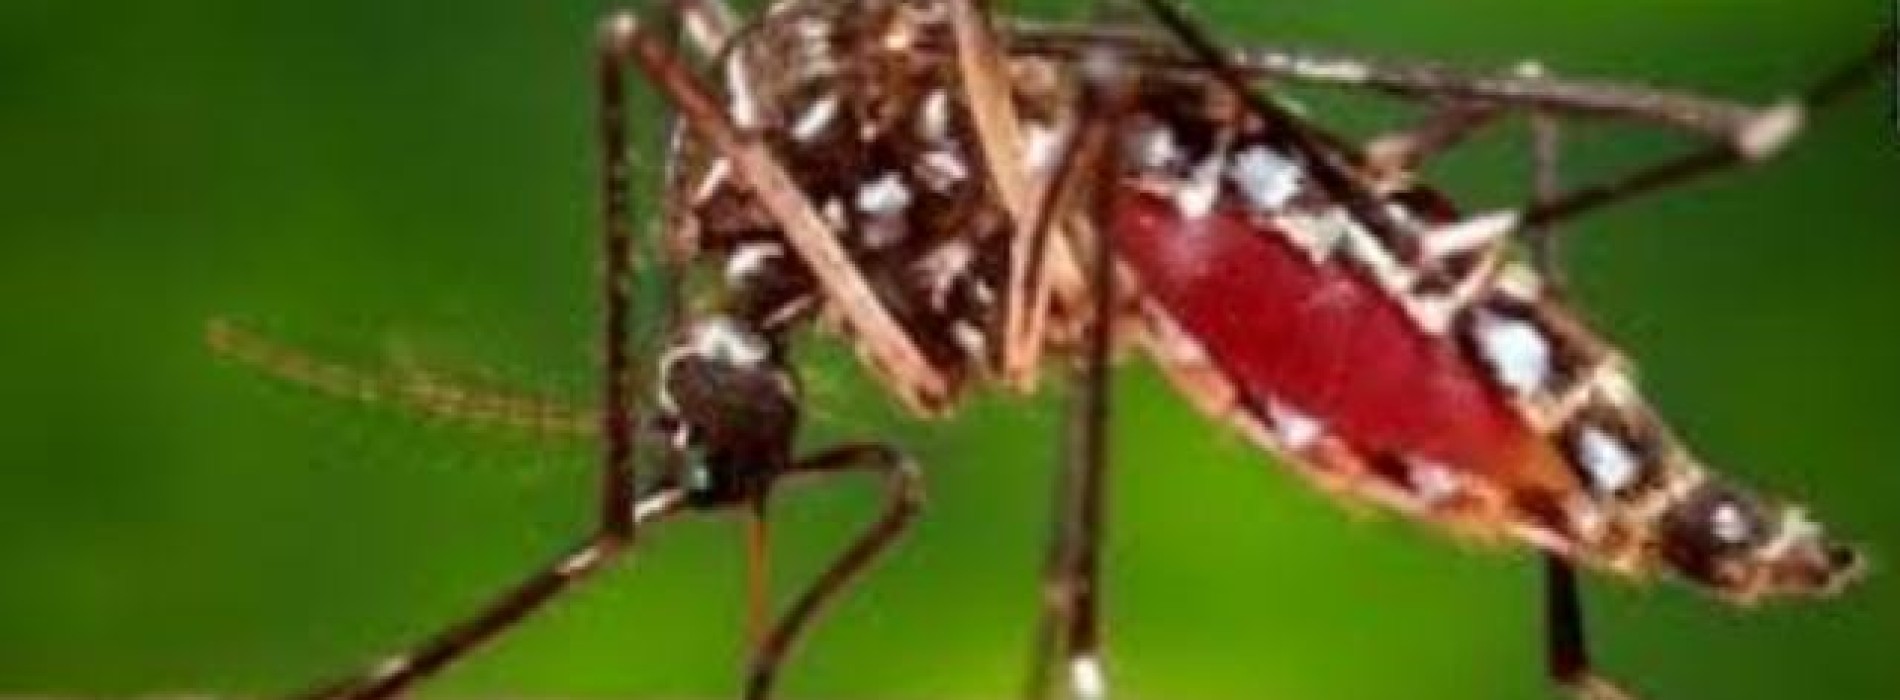 Zika virus infection: Nigeria “advises” travel restriction for pregnant women